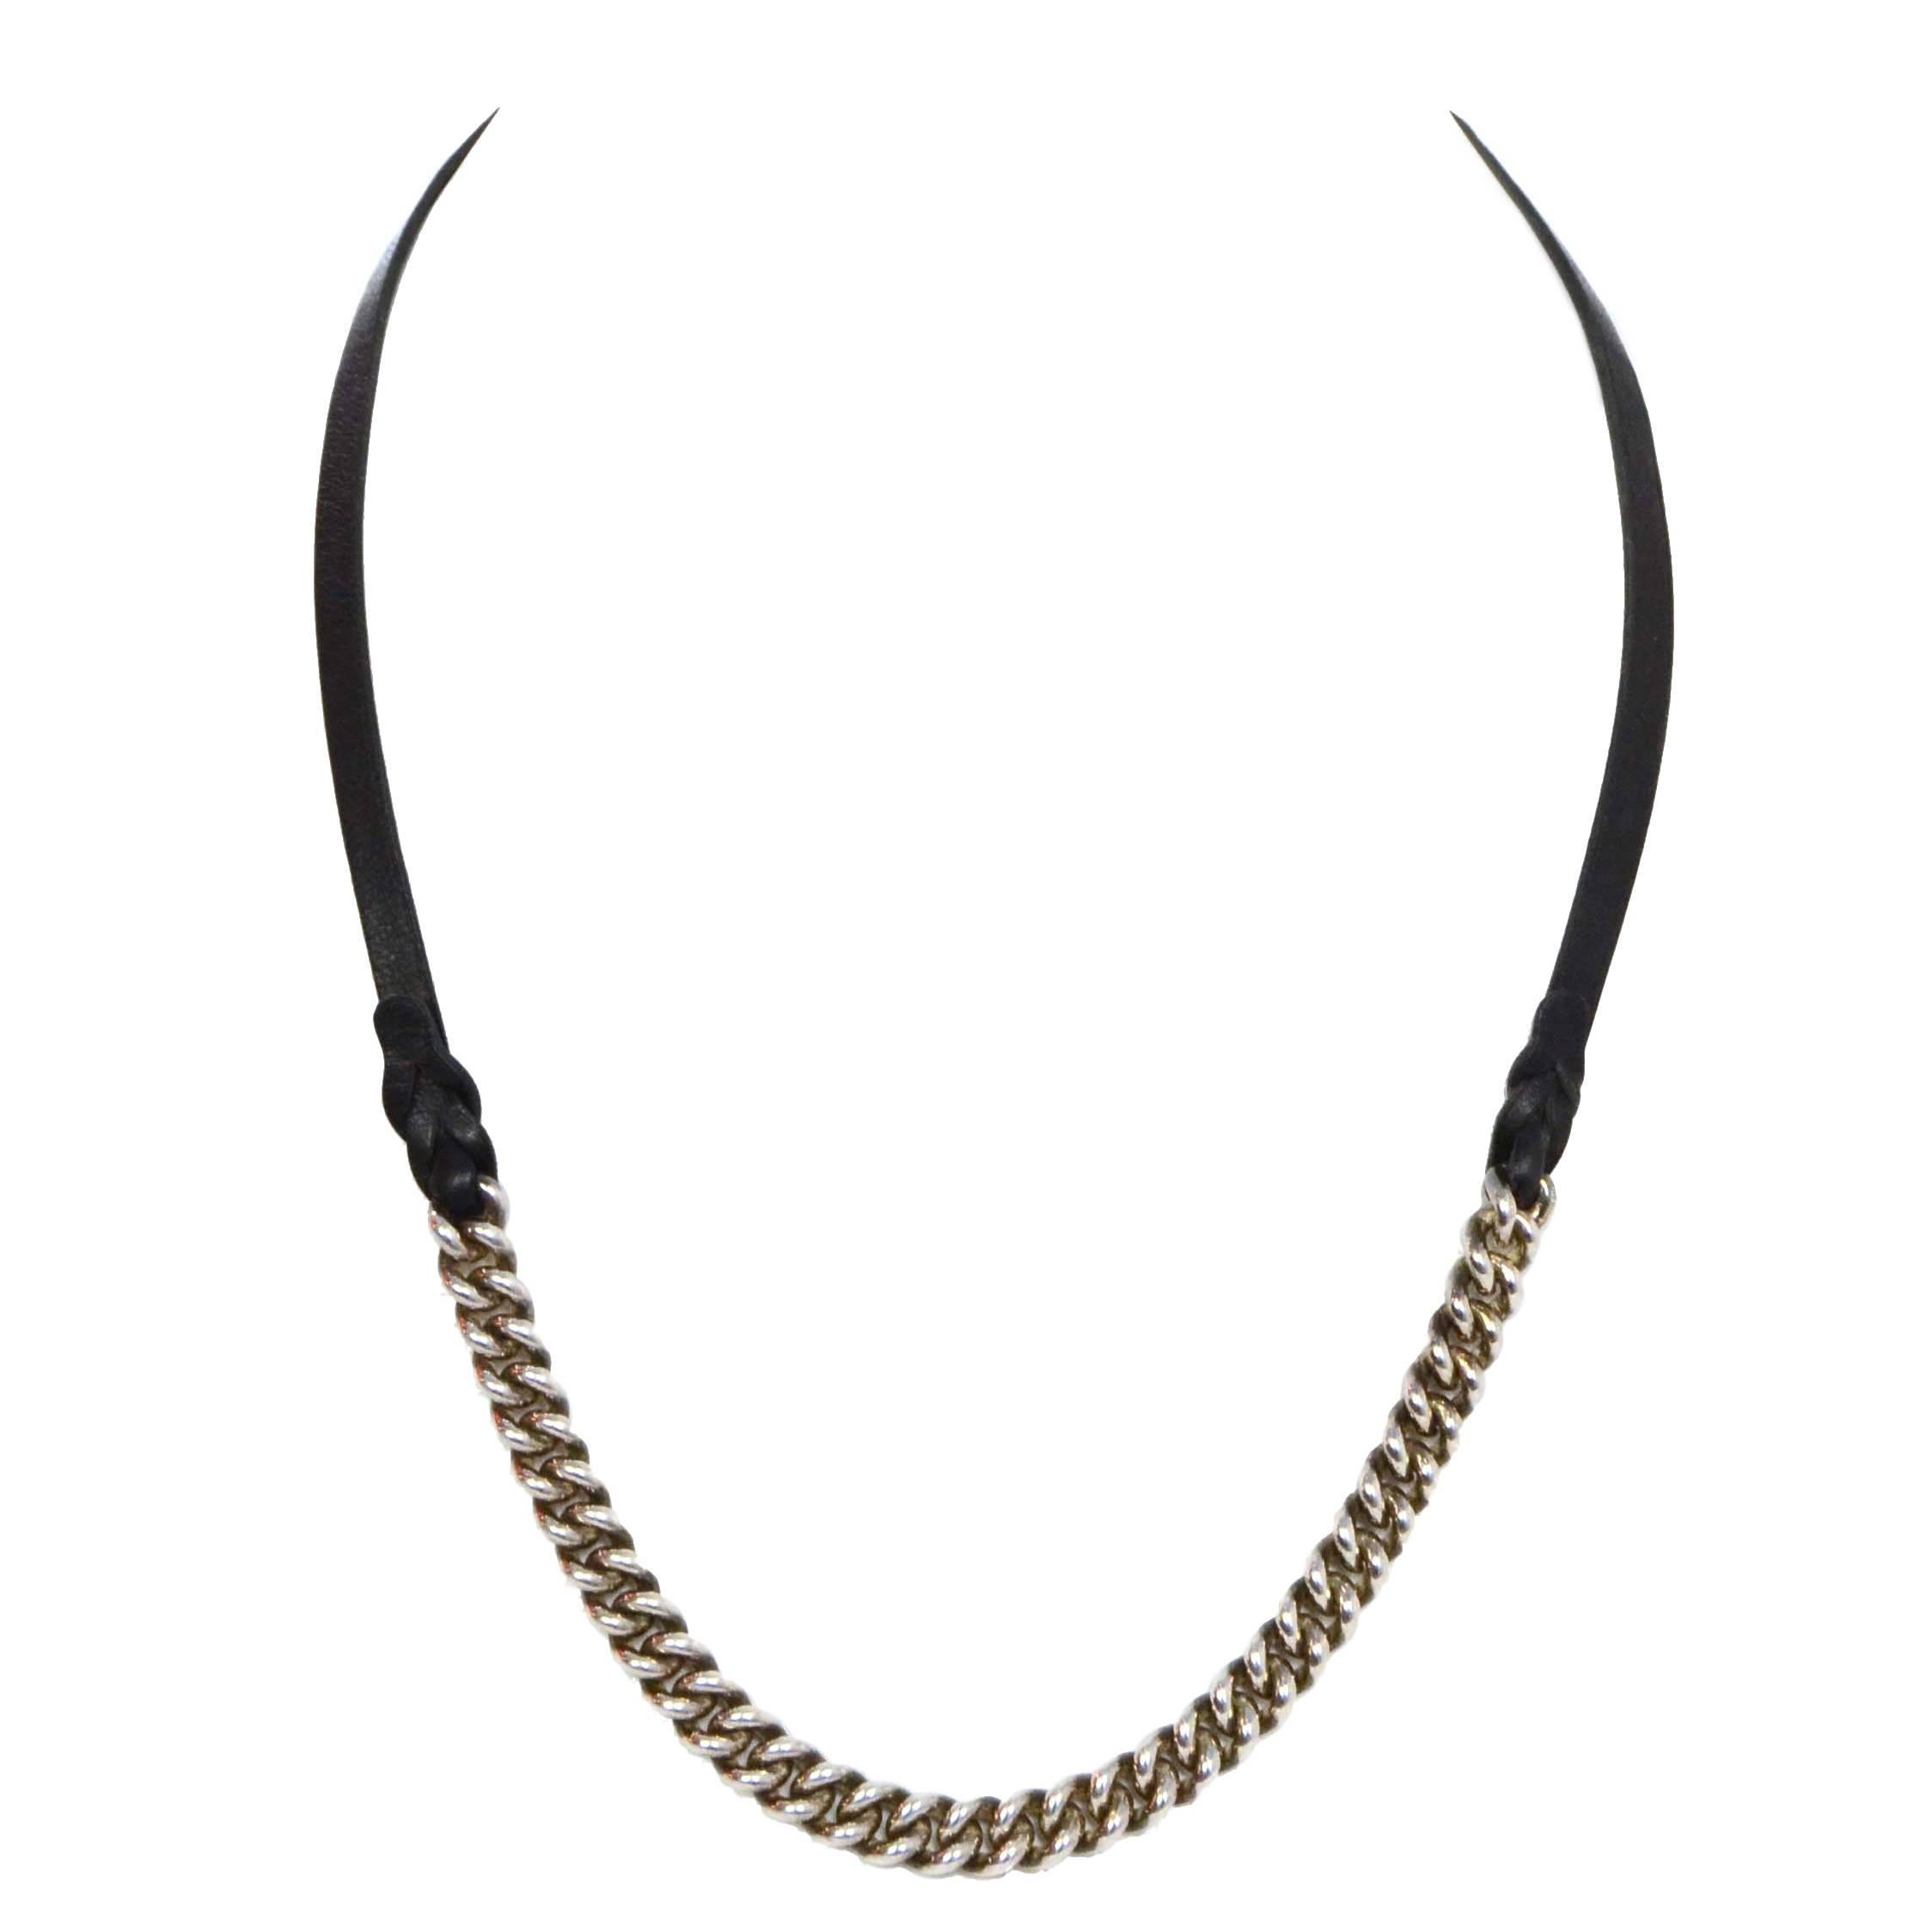 Hermes Silver & Black Leather Wrap Bracelet/Necklace